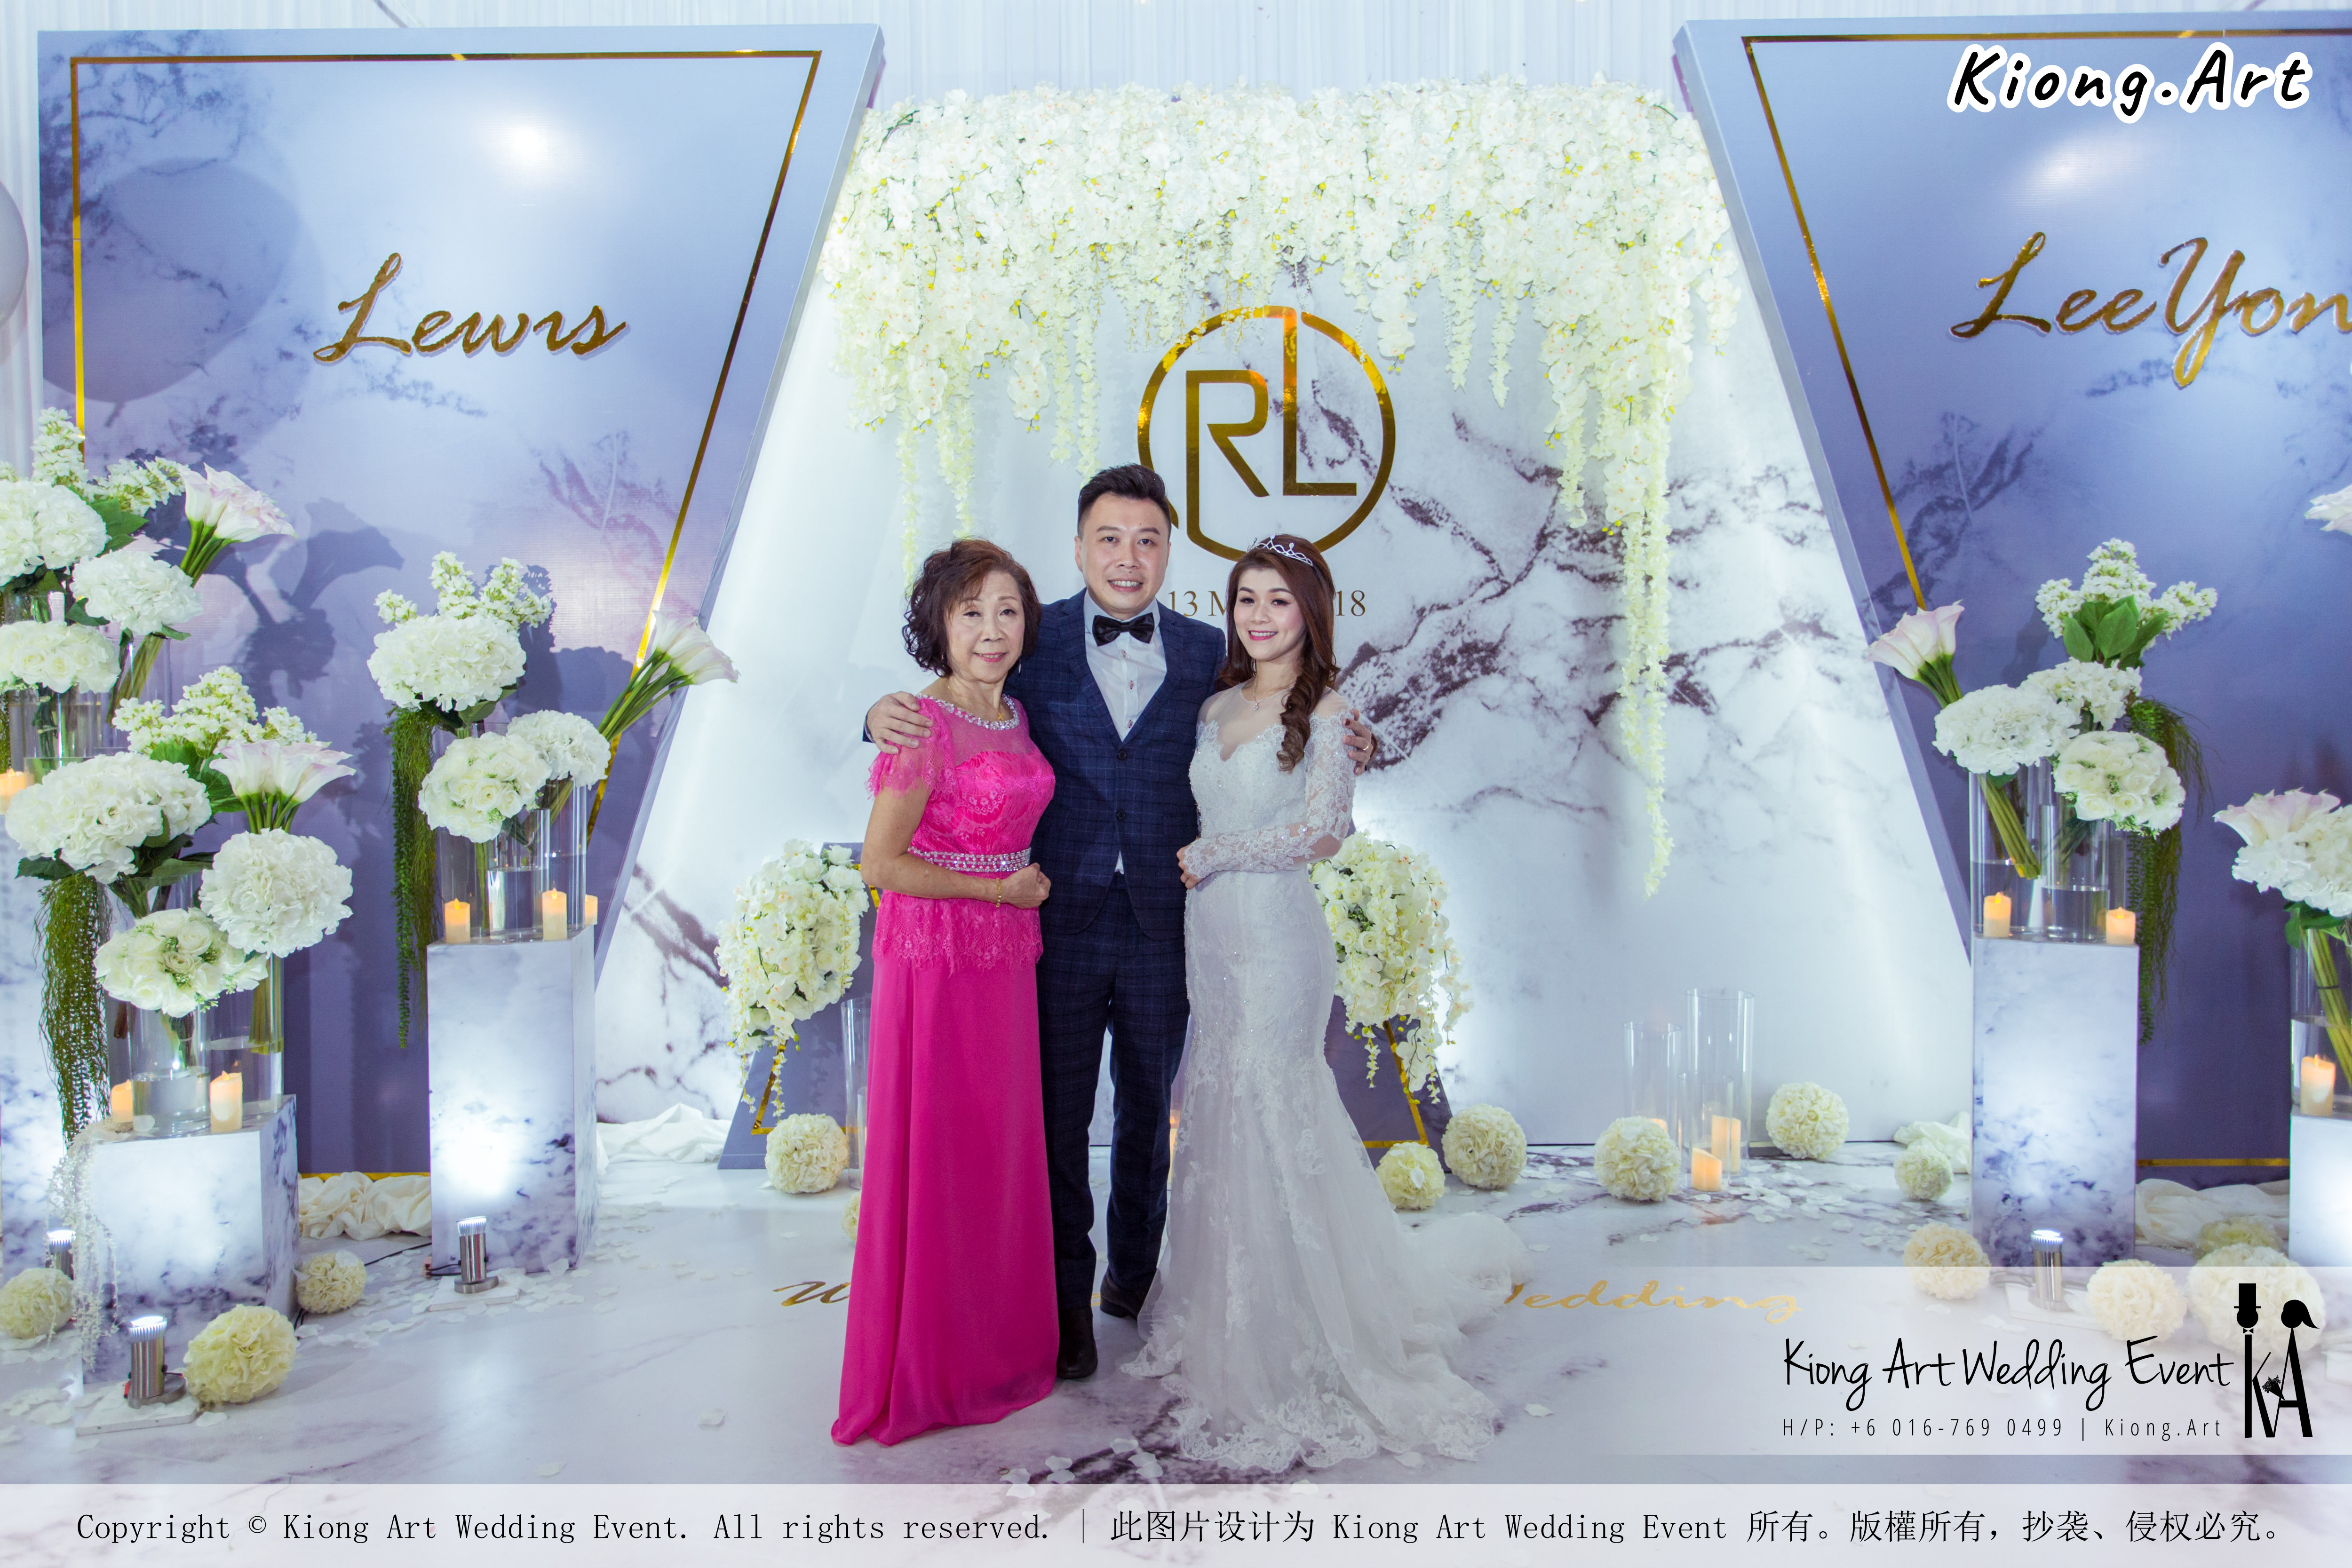 Kiong Art Wedding Event Kuala Lumpur Malaysia Event and Wedding DecorationCompany One-stop Wedding Planning Services Wedding Theme Live Band Wedding Photography Videography A03-57